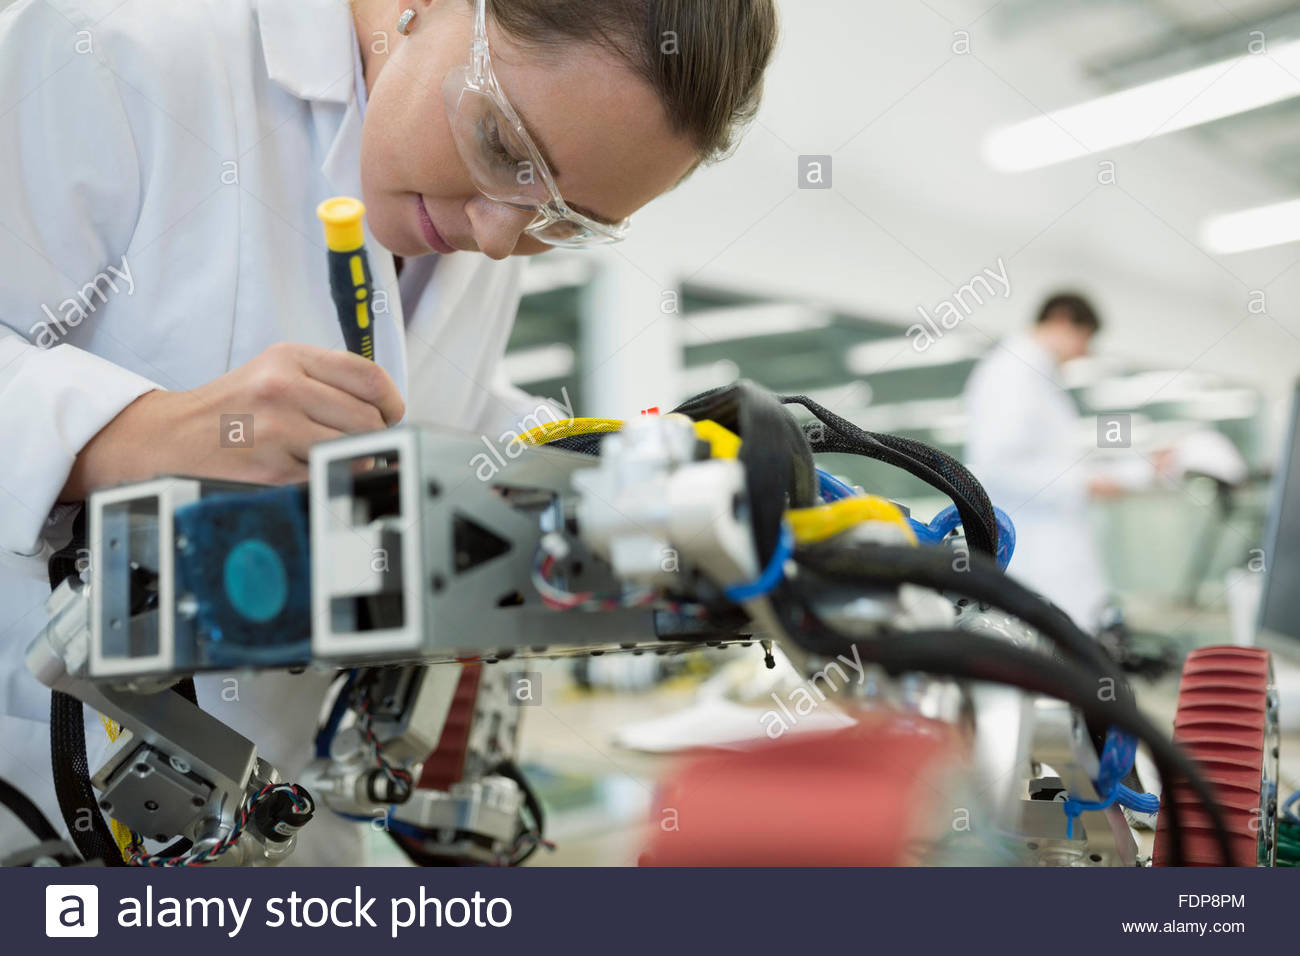 Engineer assembling robotics in factory Stock Photo